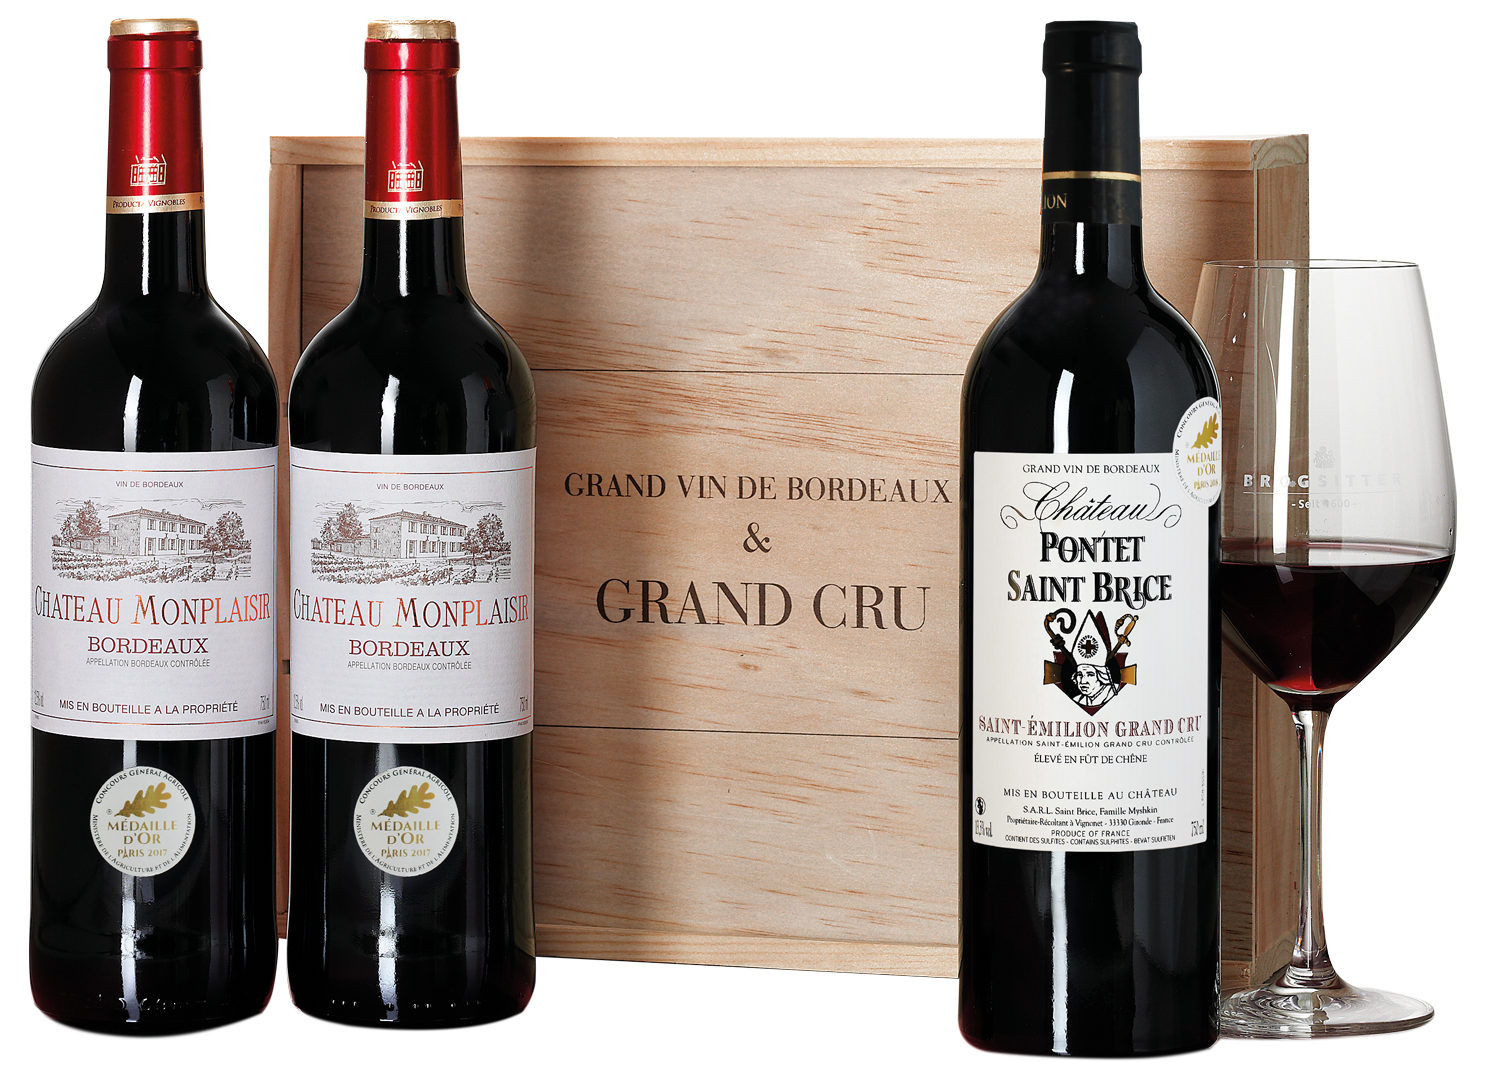 Вин муром. Grand Cru Bordeaux. Haut Pontet St-Emilion Grand Cru. VIN de Bordeaux Bordeaux. Шато де Сеген бордо вино 2015 Гранд вин.